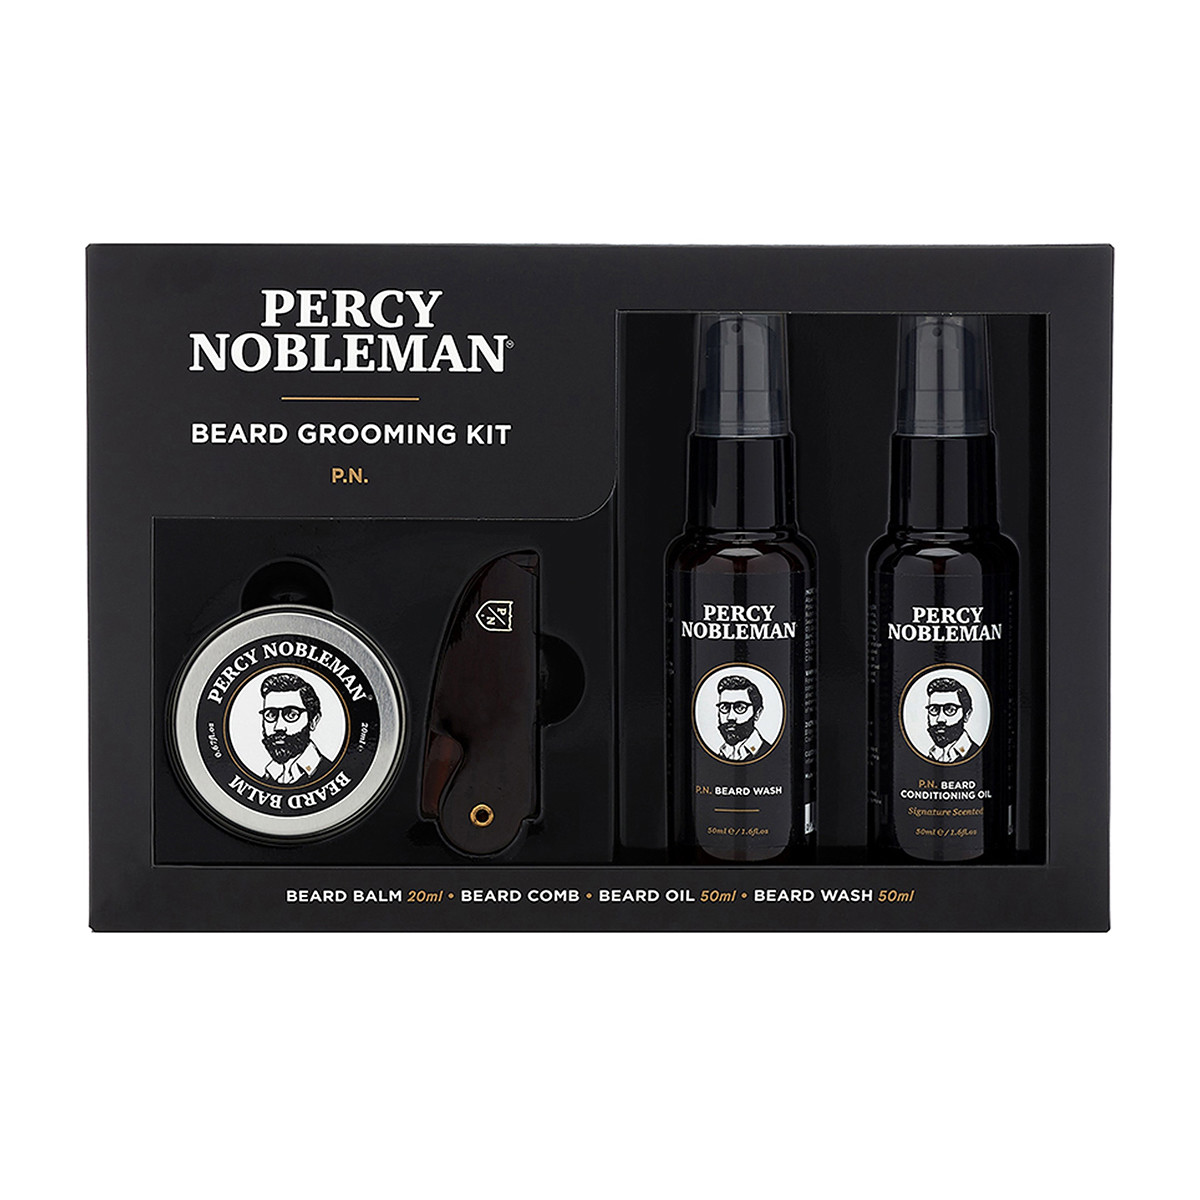 Se Percy Nobleman Beard Grooming Kit hos Proshave